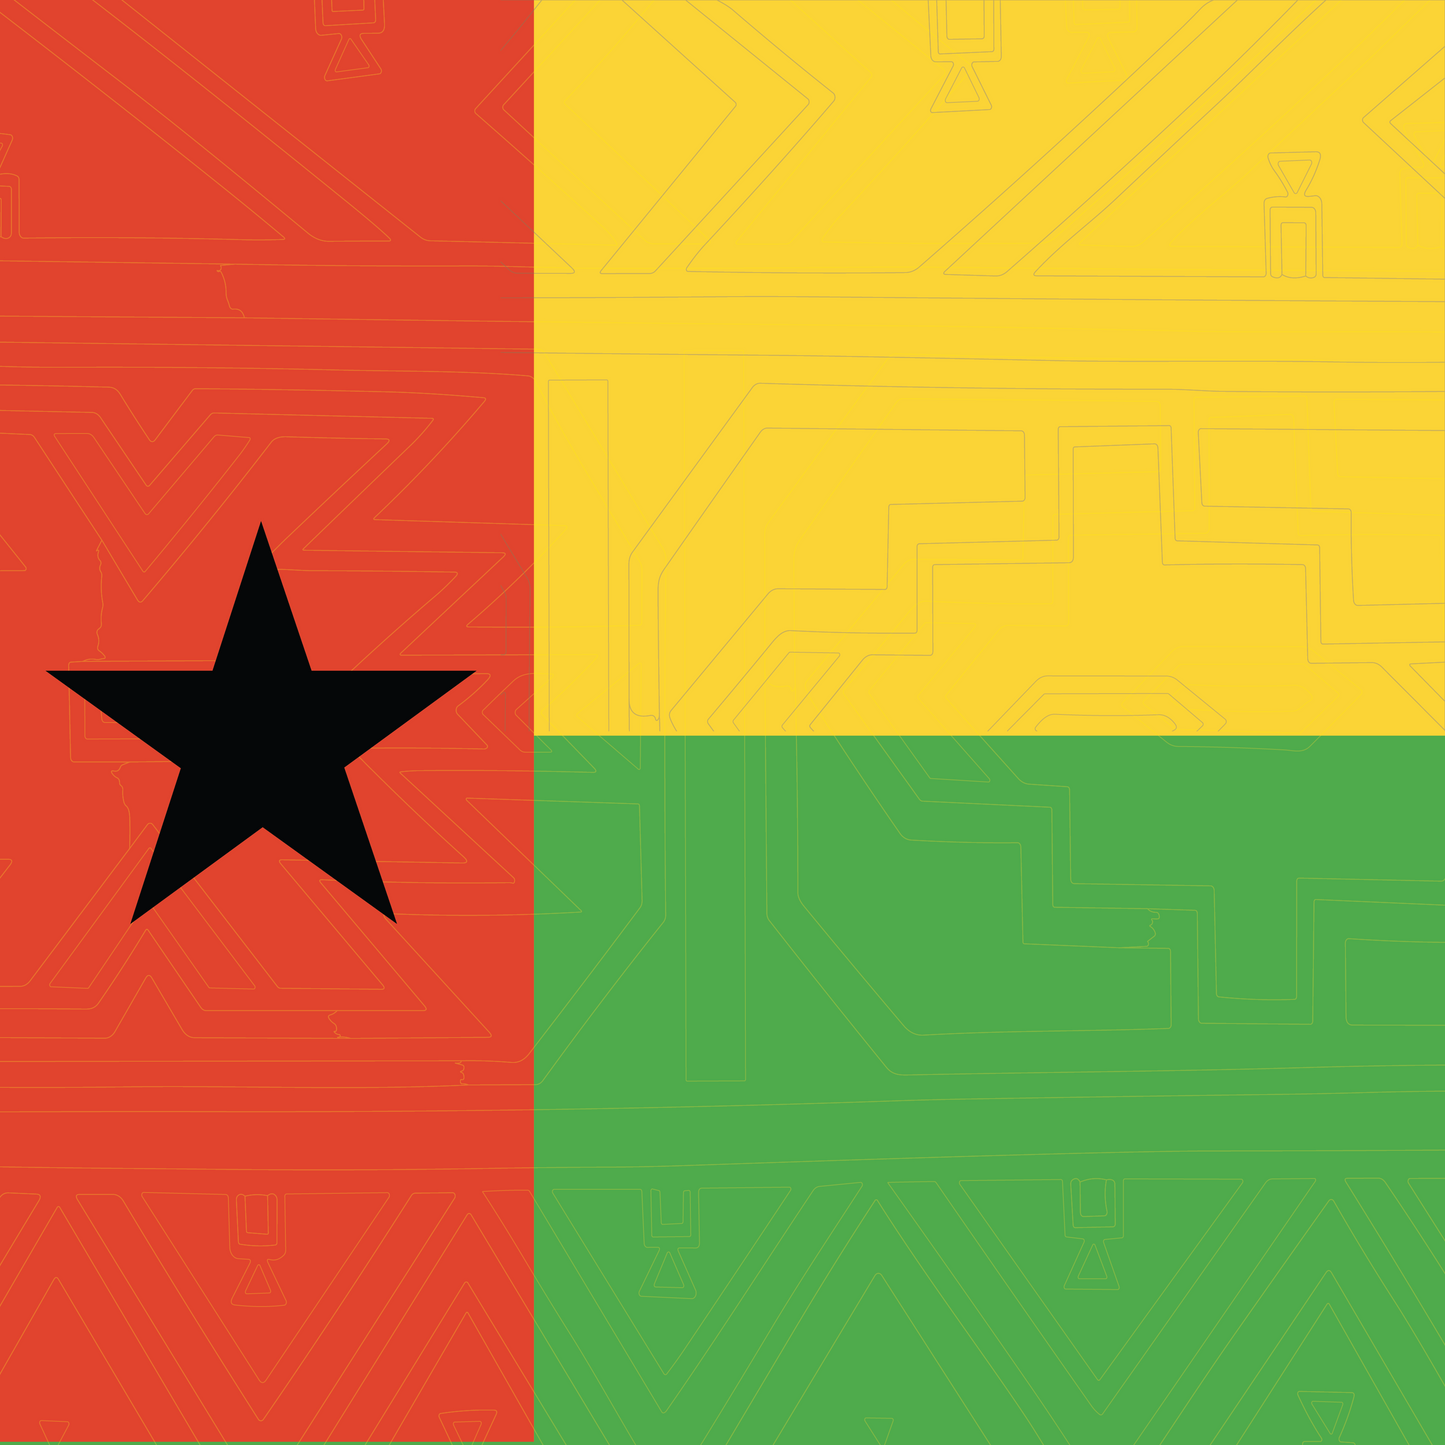 Guinea-Bissau Flag bandana